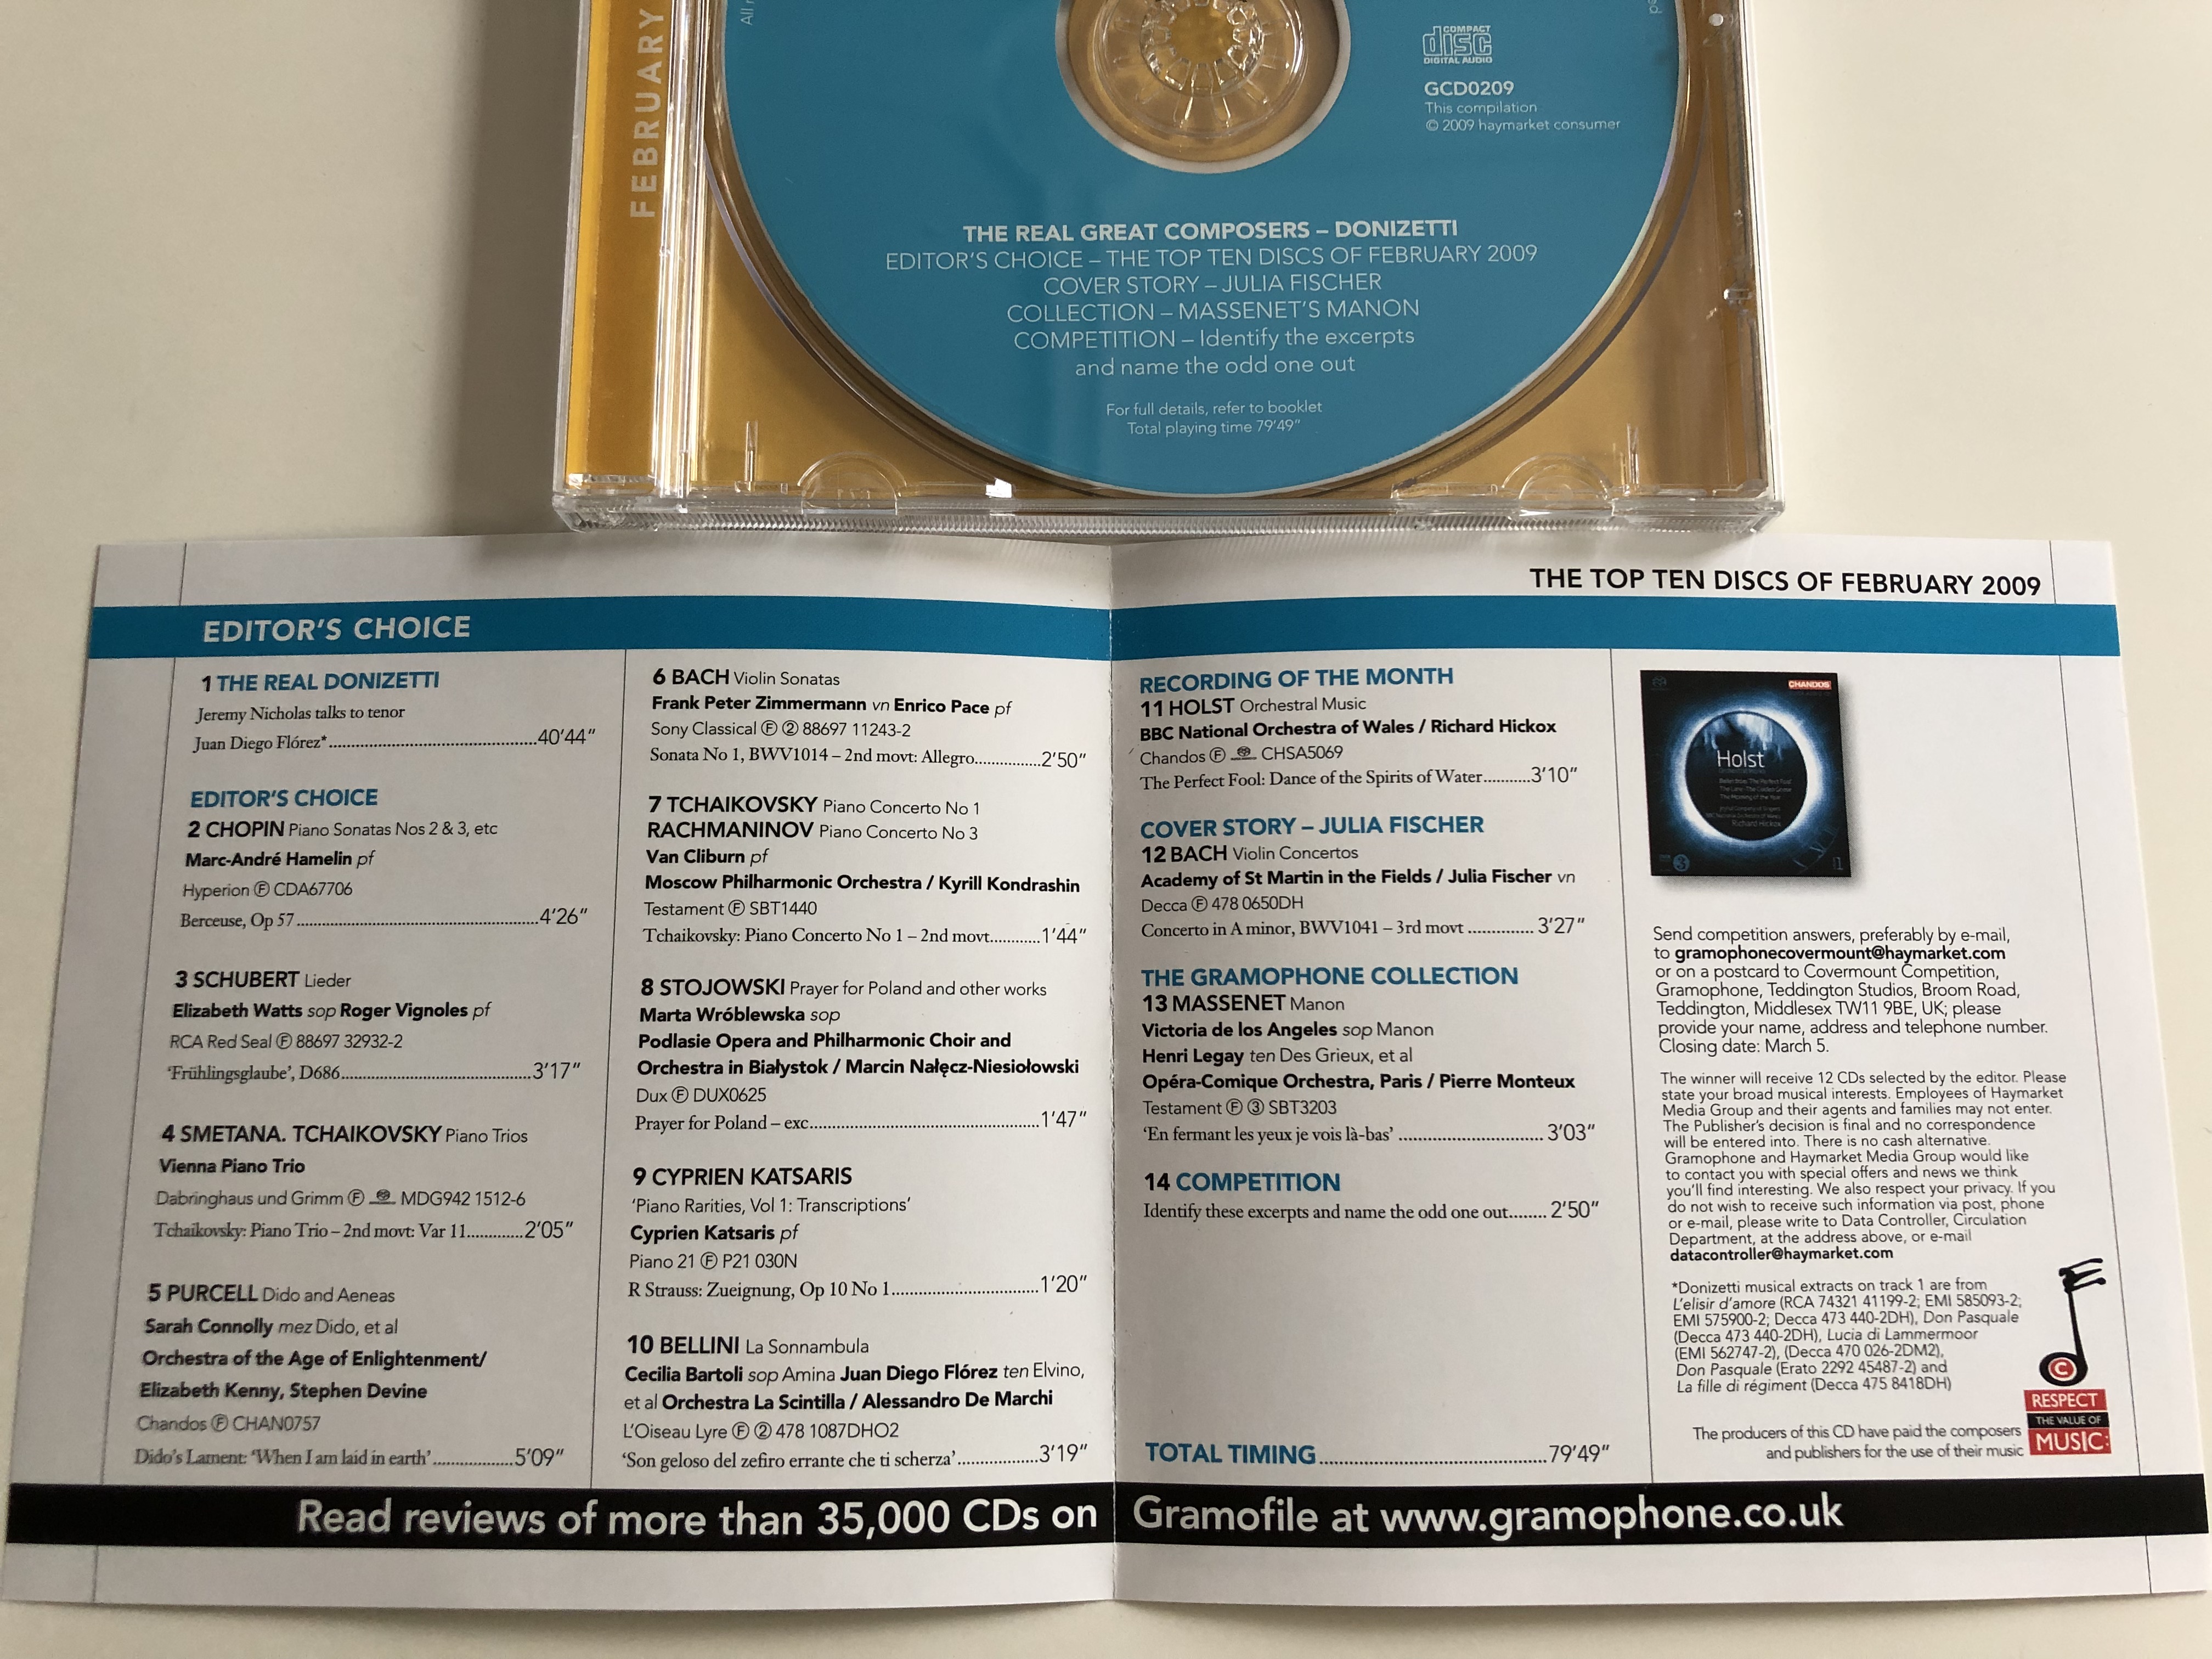 juan-diego-florez-on-donizetti-the-bel-canto-tenor-on-one-of-italy-s-opera-greats-february-2009-gramophone-audio-cd-2009-gcd0209-2-.jpg